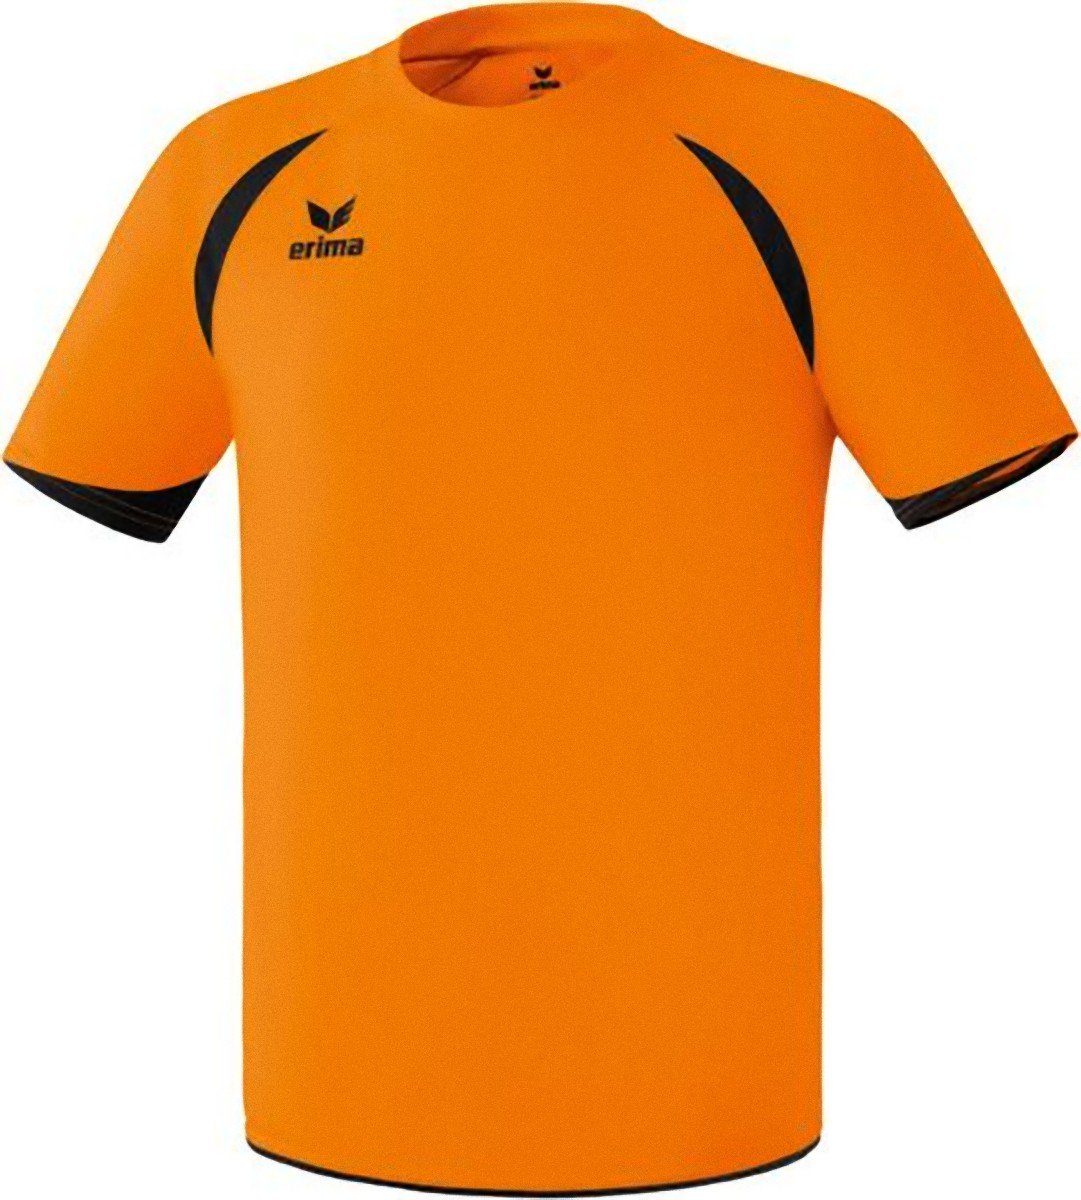 Erima Funktionsshirt Tanaro Trikot Sportshirt Fussball T-Shirt Funktionsshirt Shirt Handball Laufshirt